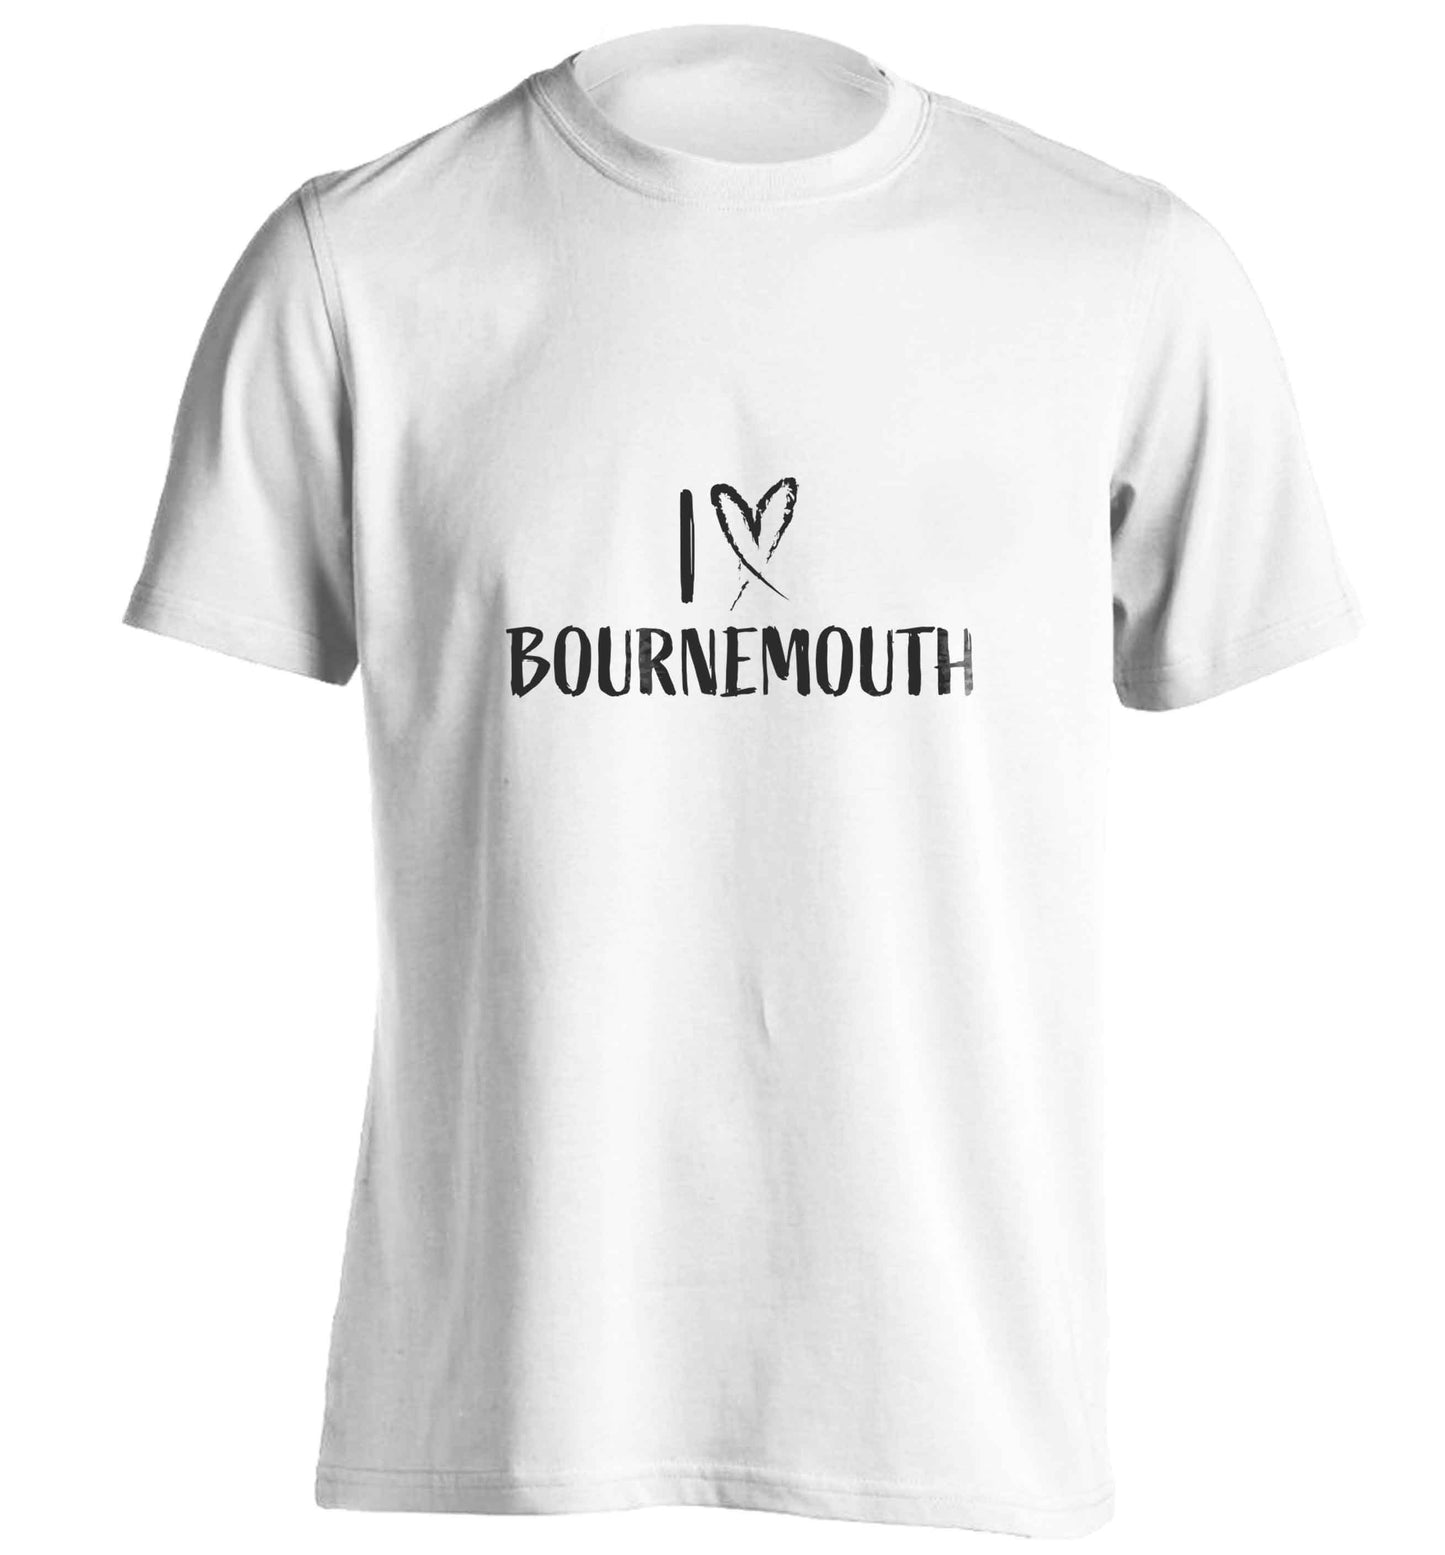 I love Bournemouth adults unisex white Tshirt 2XL